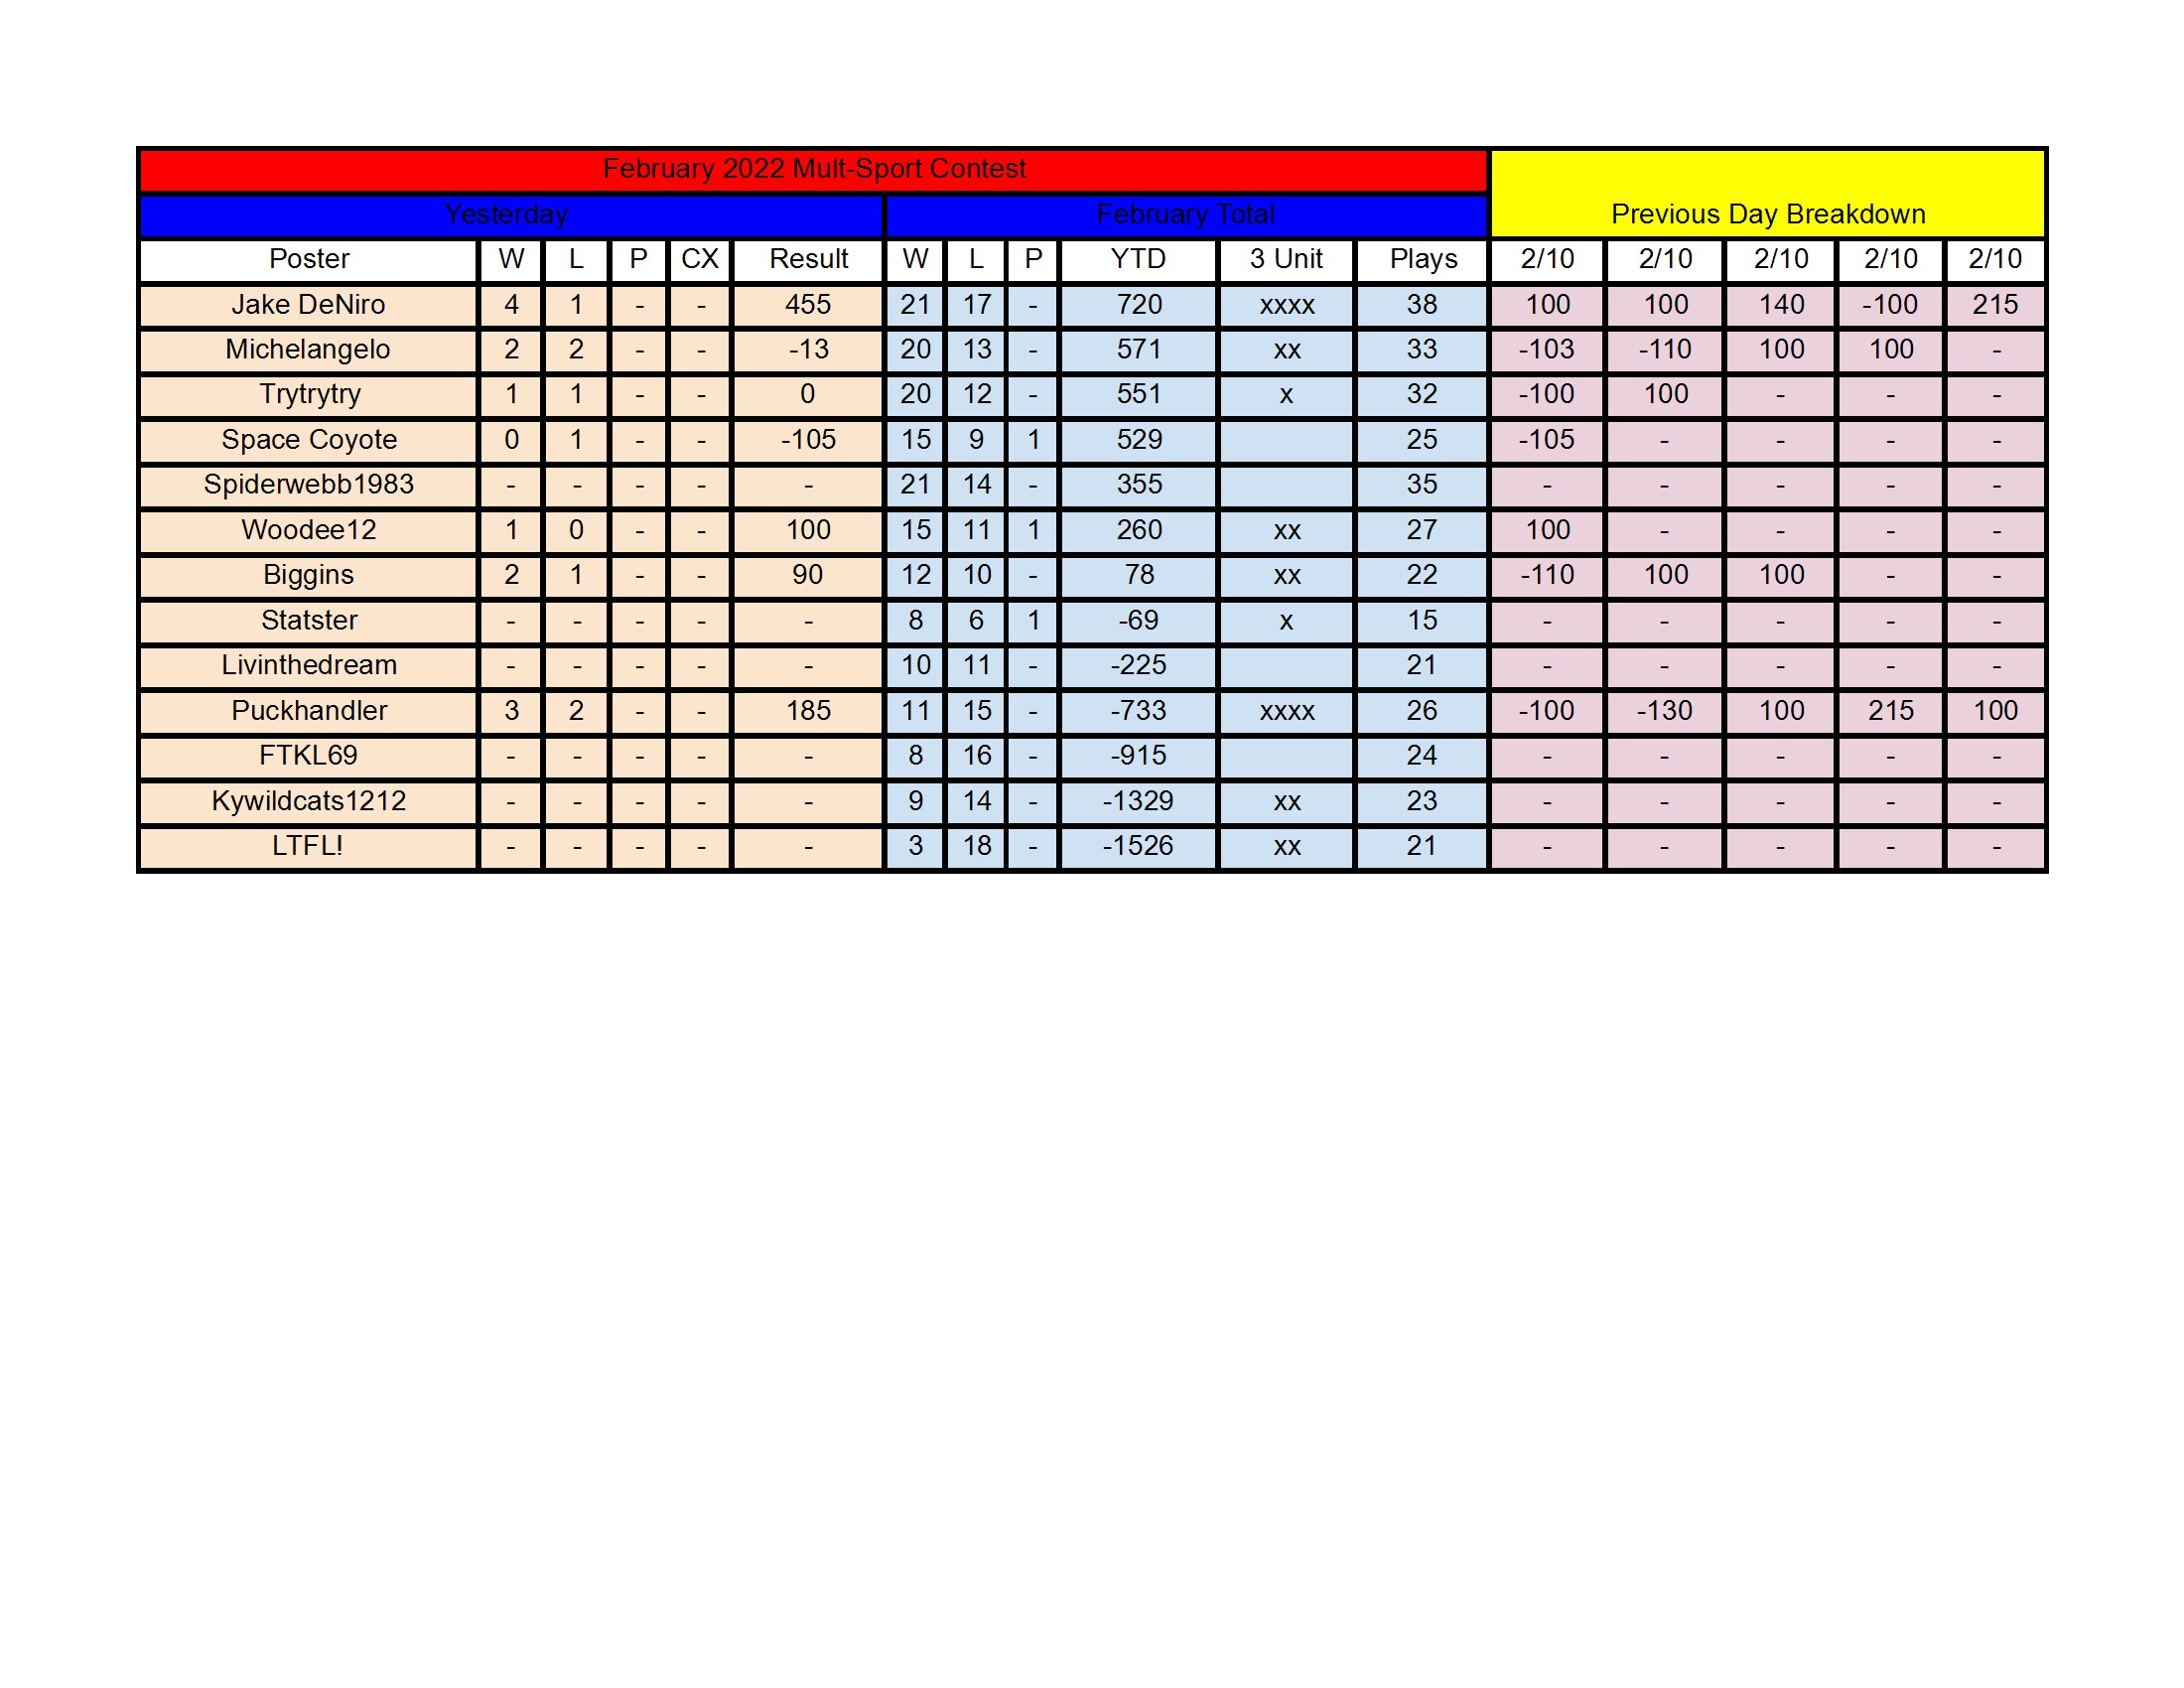 February Standings - 2_10 conv 1.jpeg